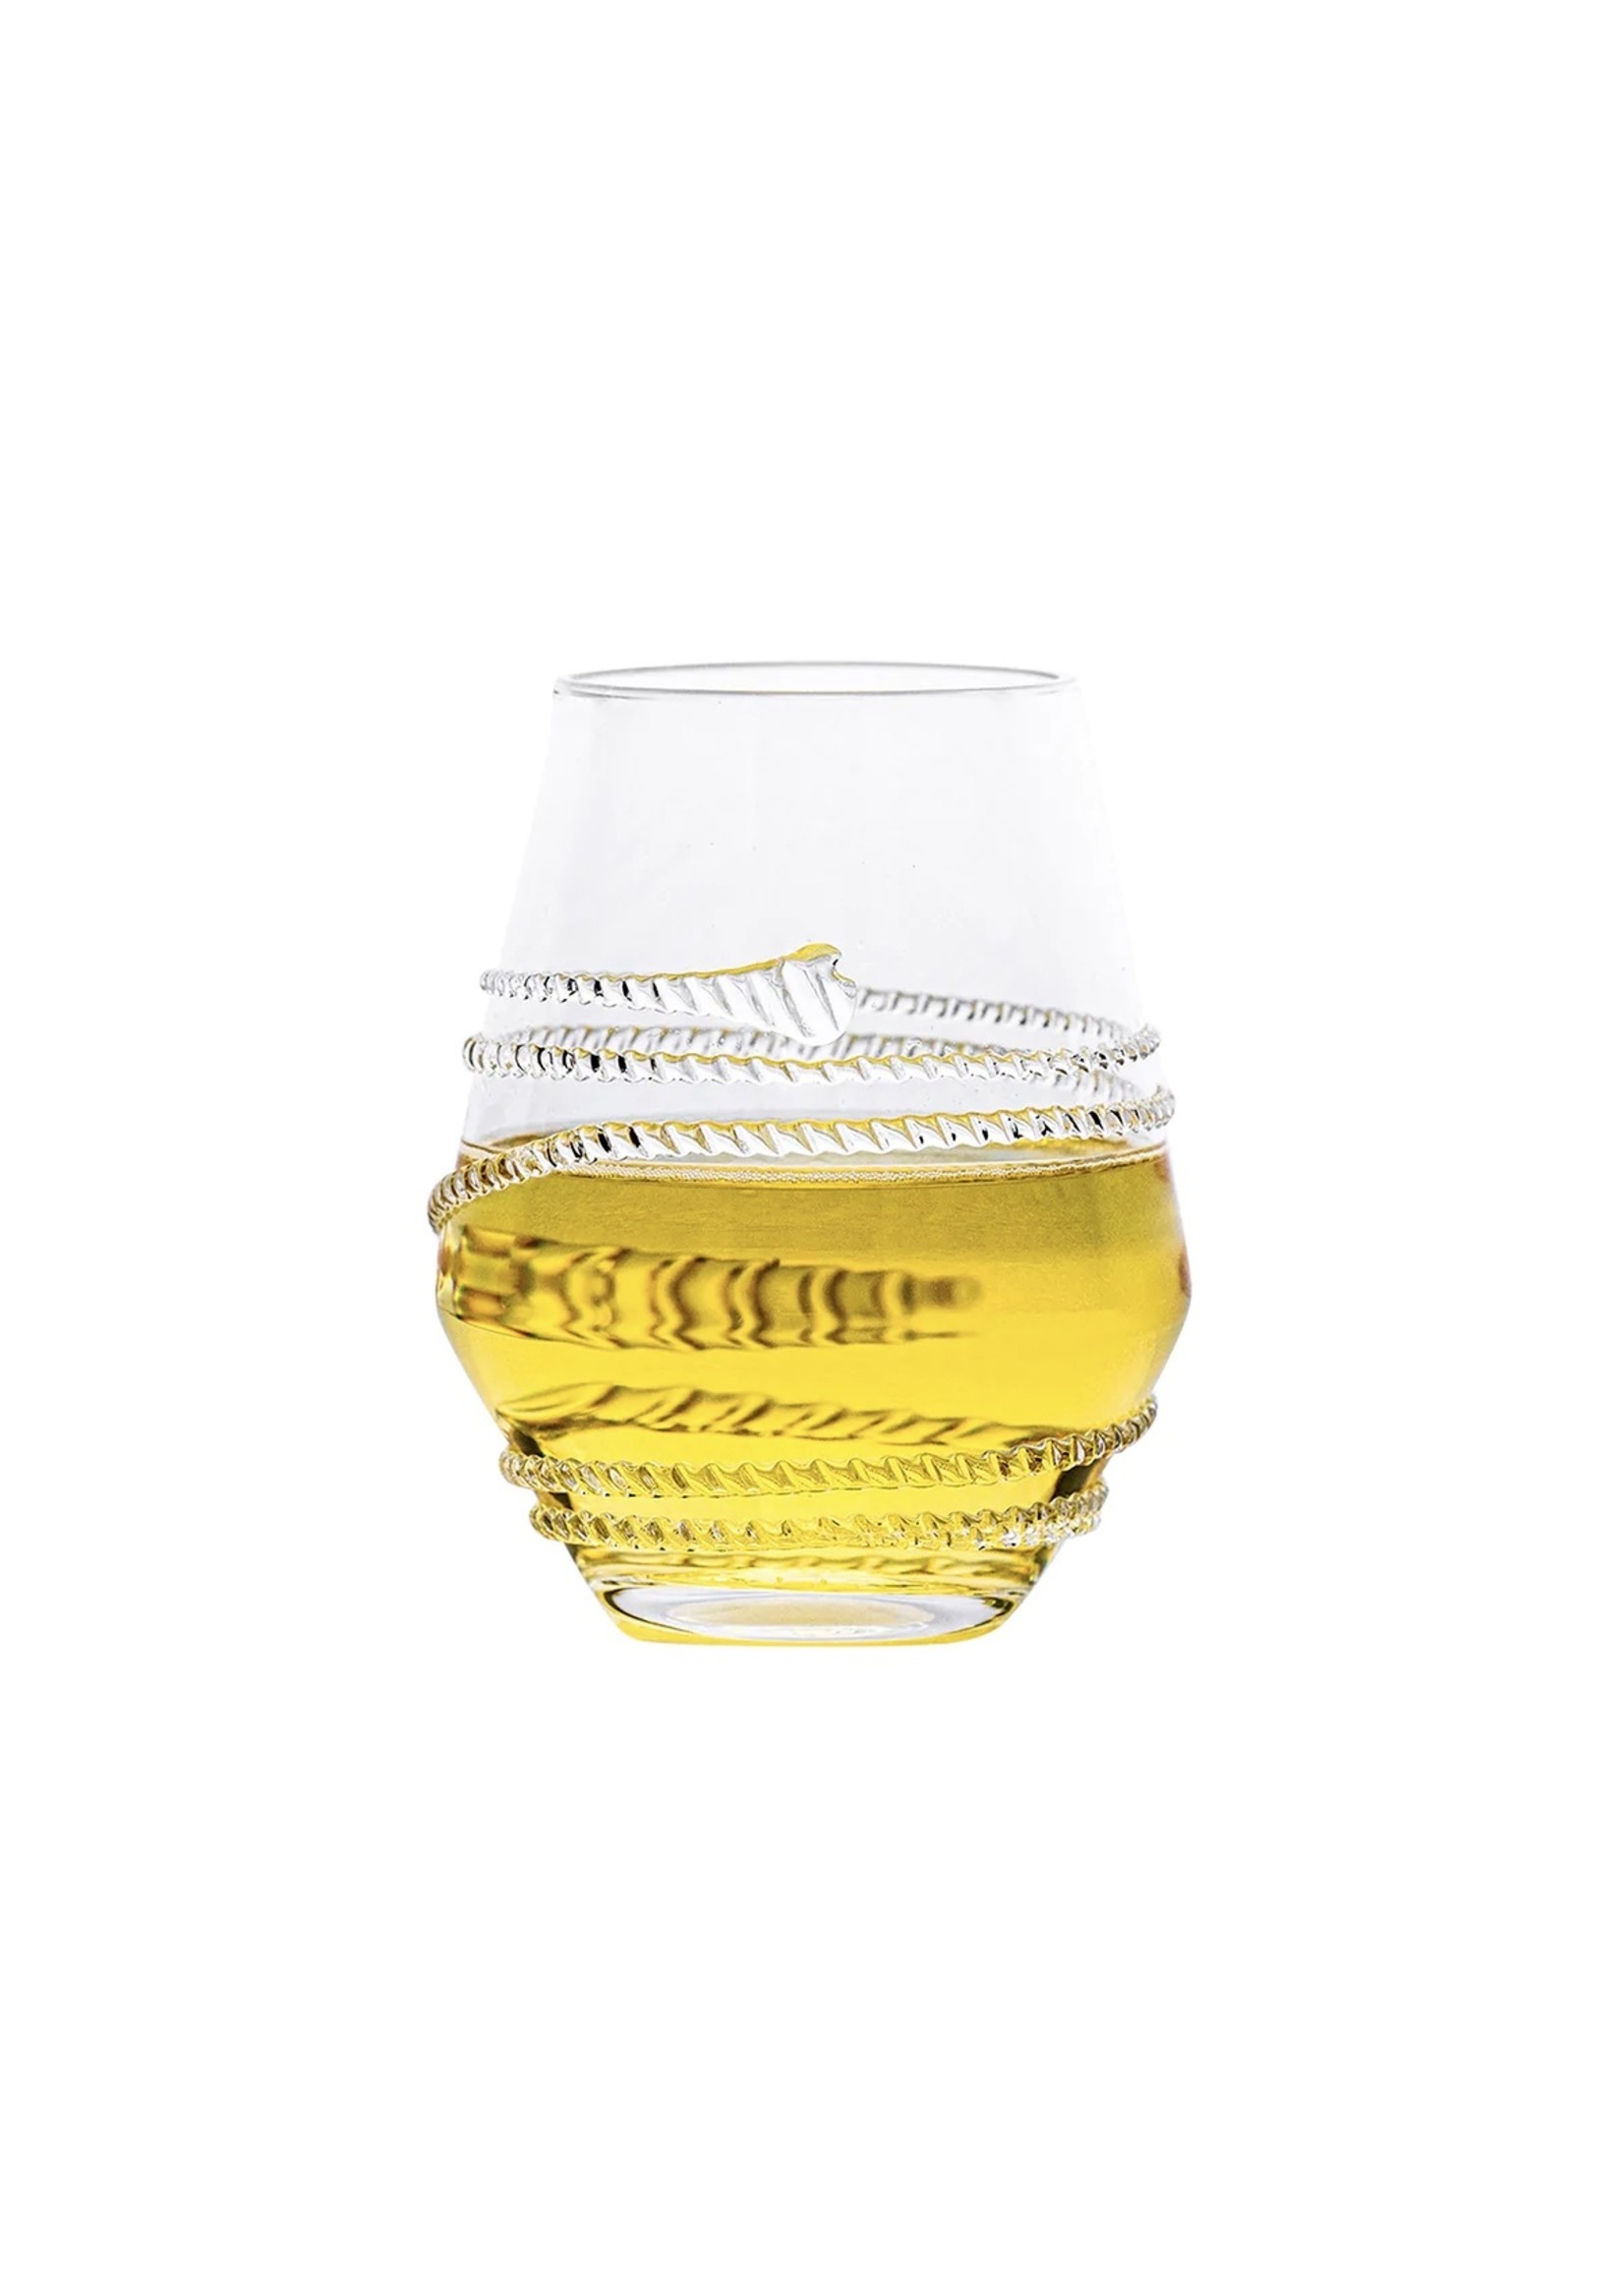 Juliska Chloe Stemless Wine Glass